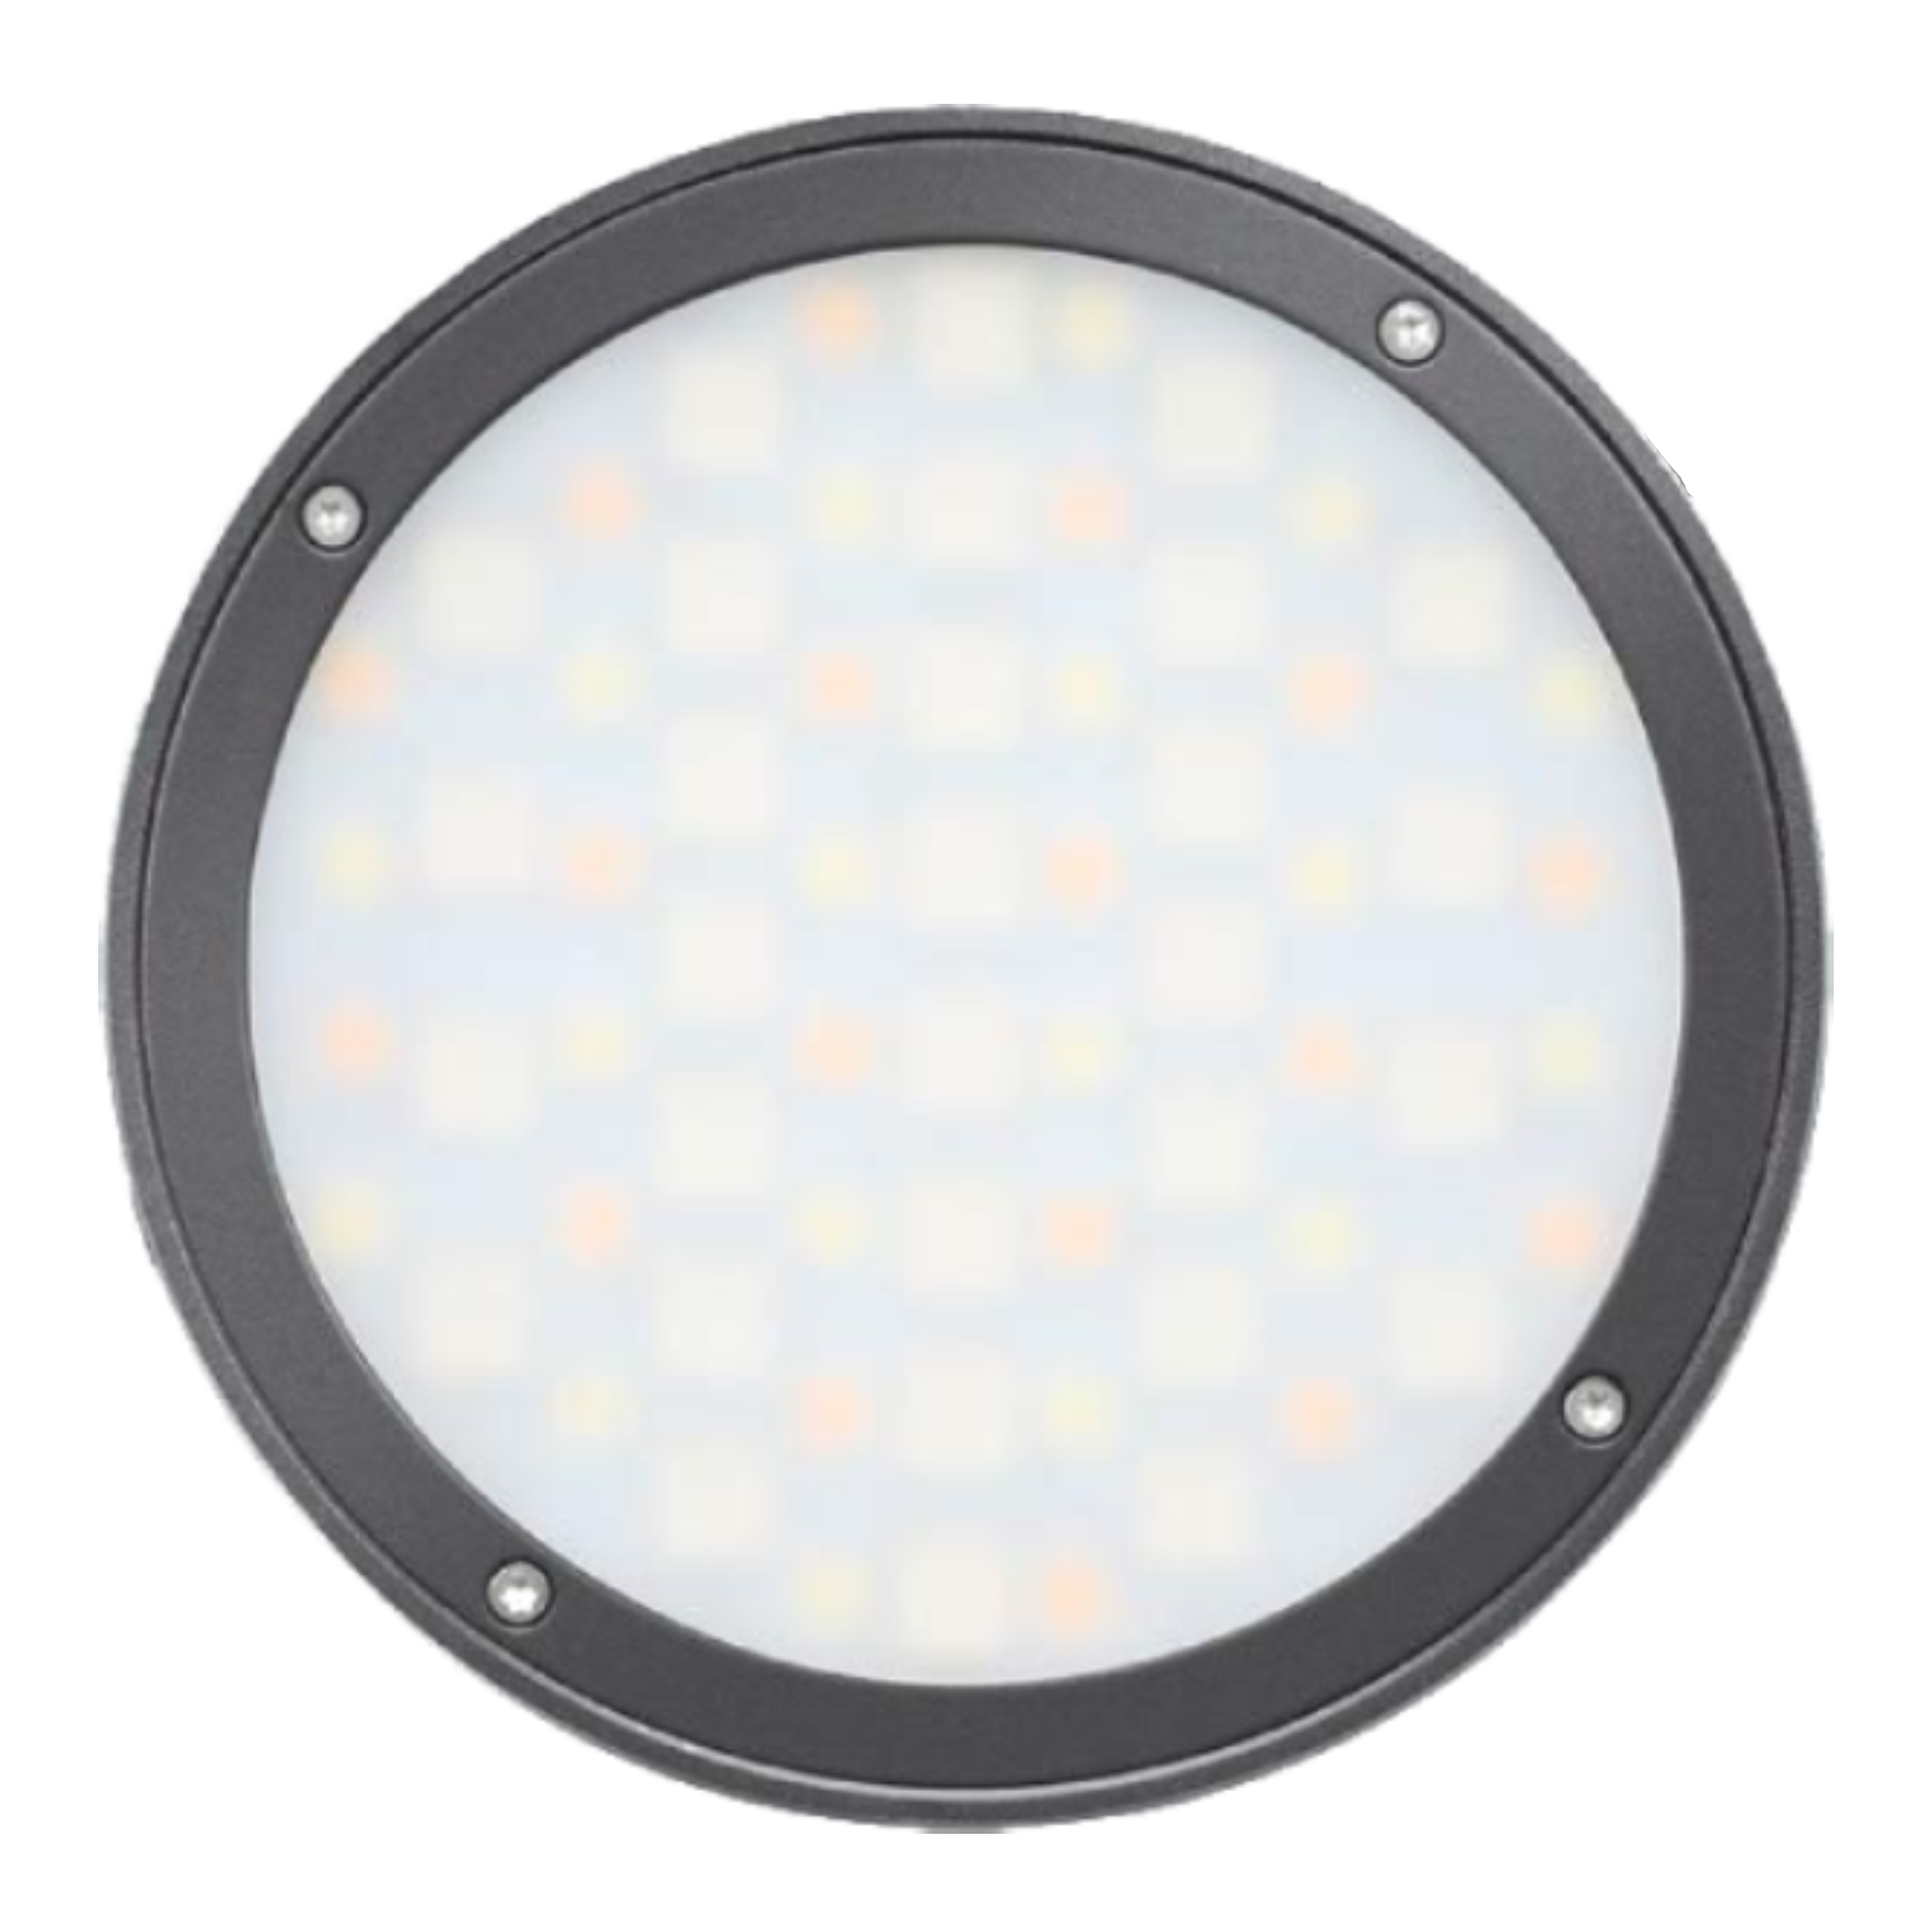 Godox R1 LED Light for Photography (Mini Creative RGB Light)